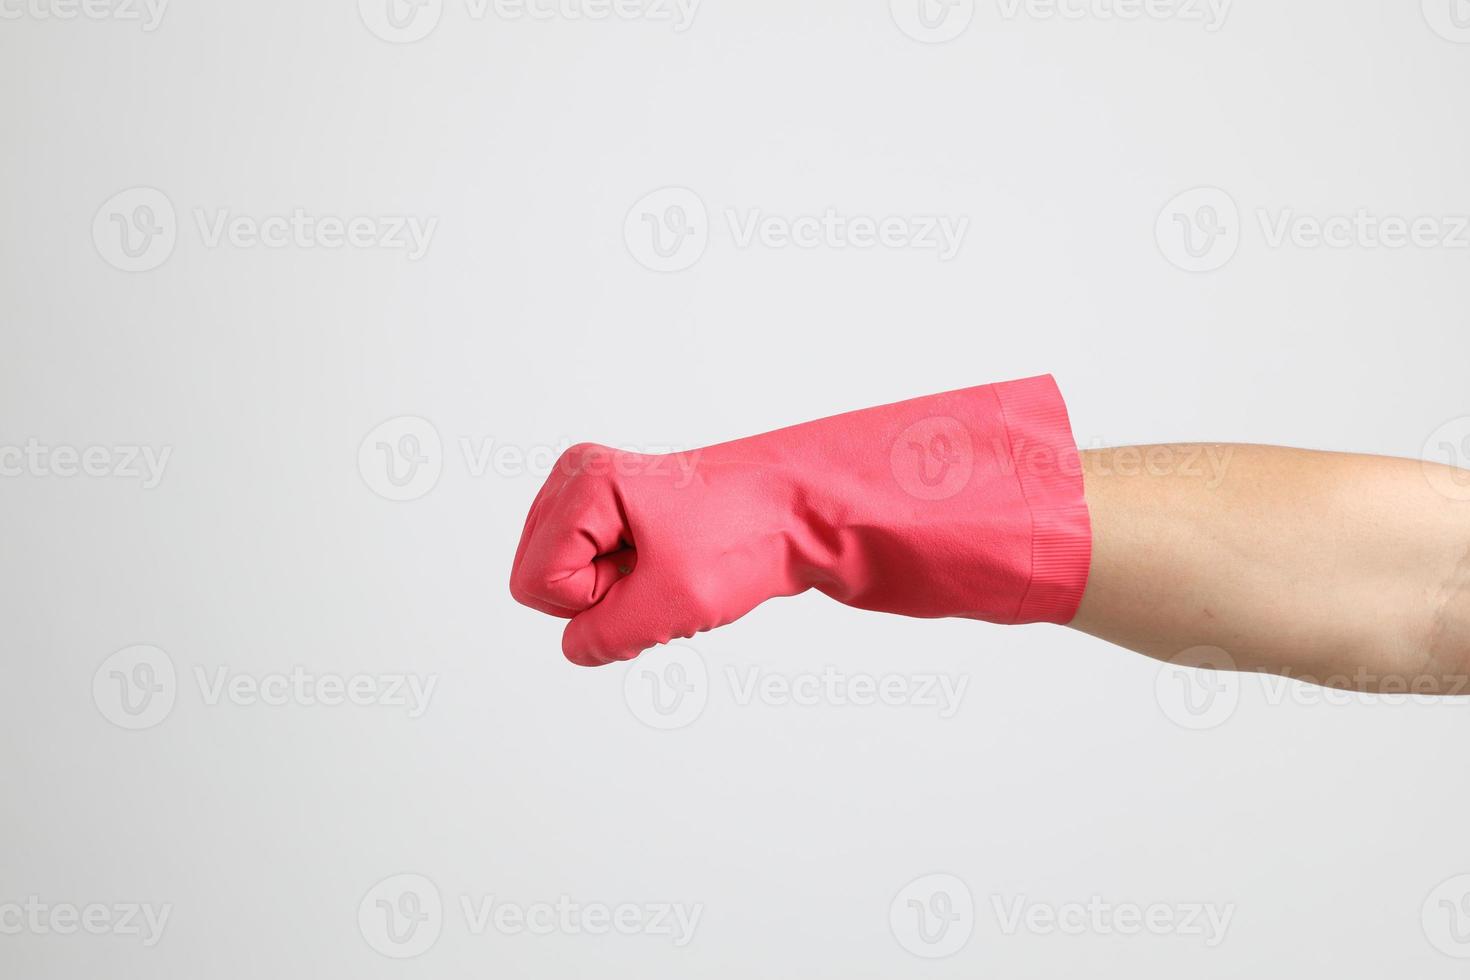 rosa Dienstmädchenhandschuhe foto